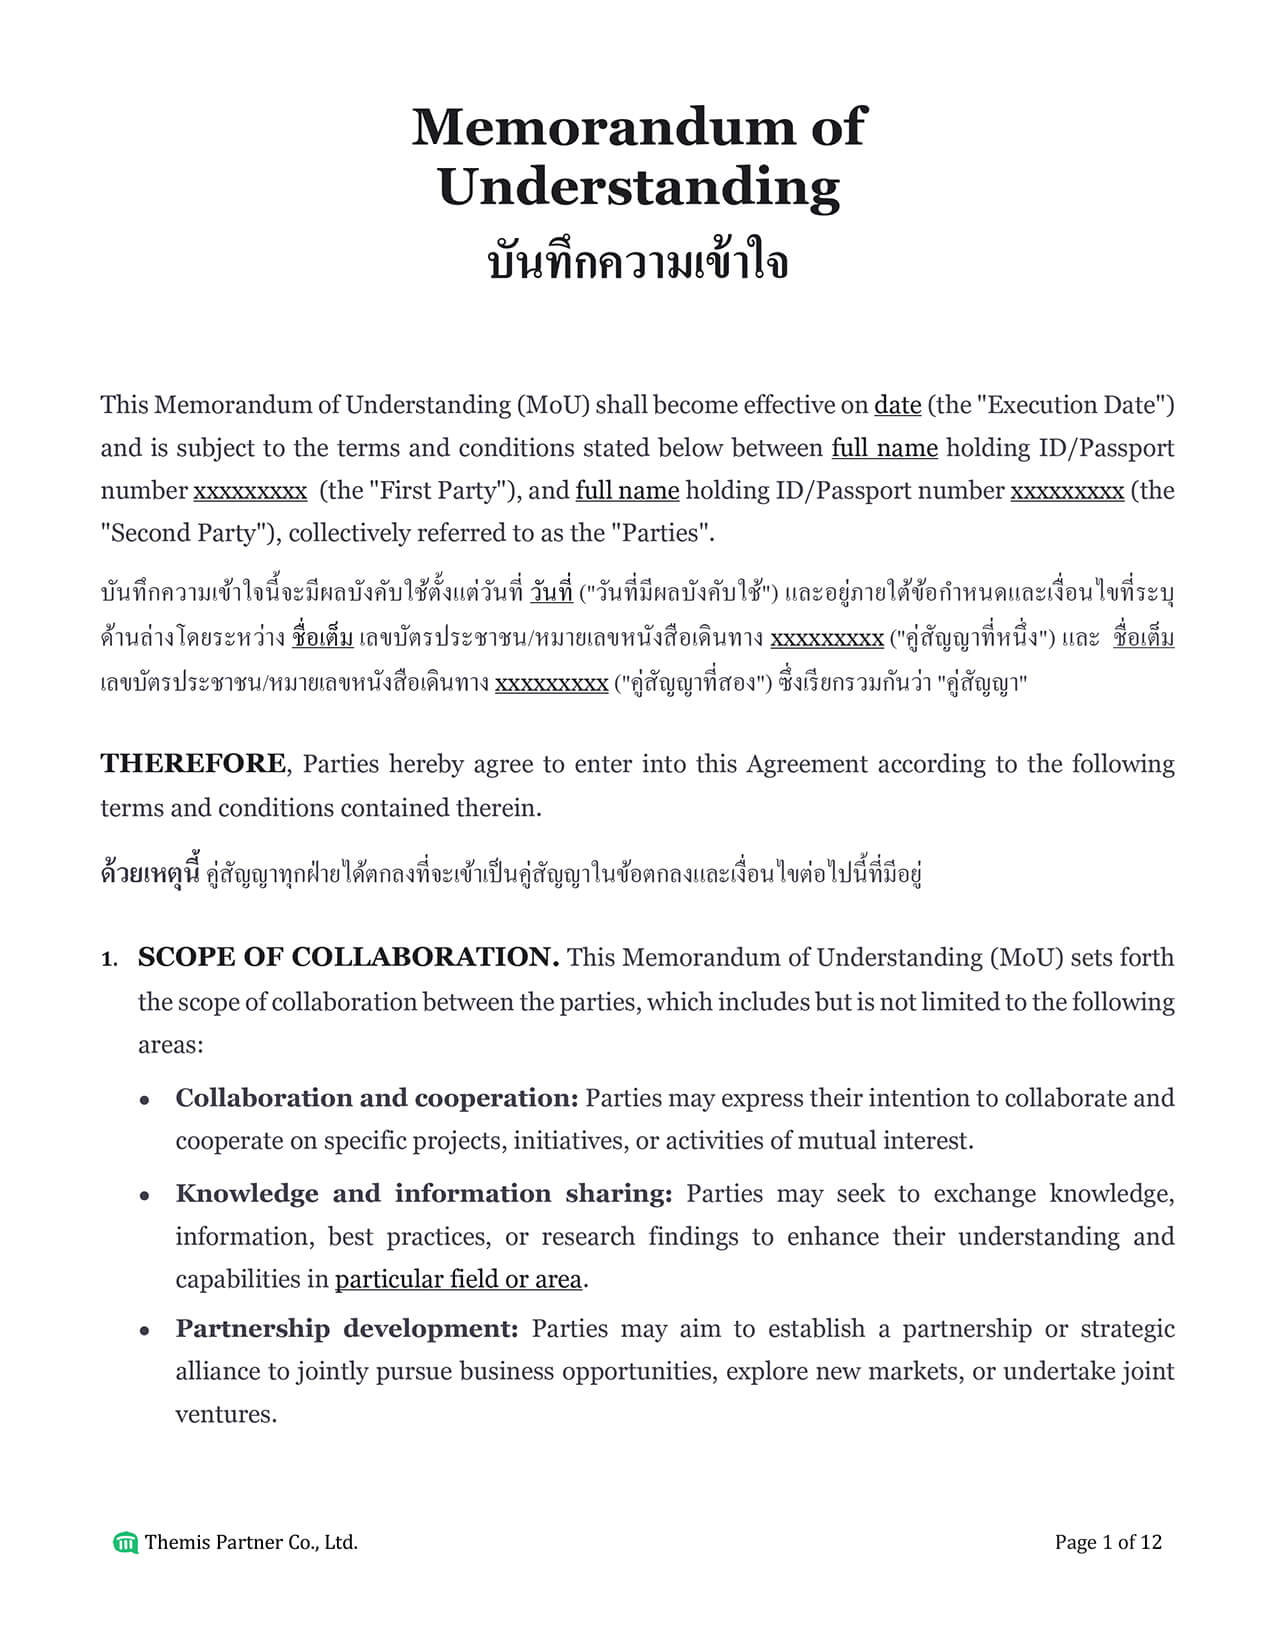 Memorandum of understanding Thailand 1